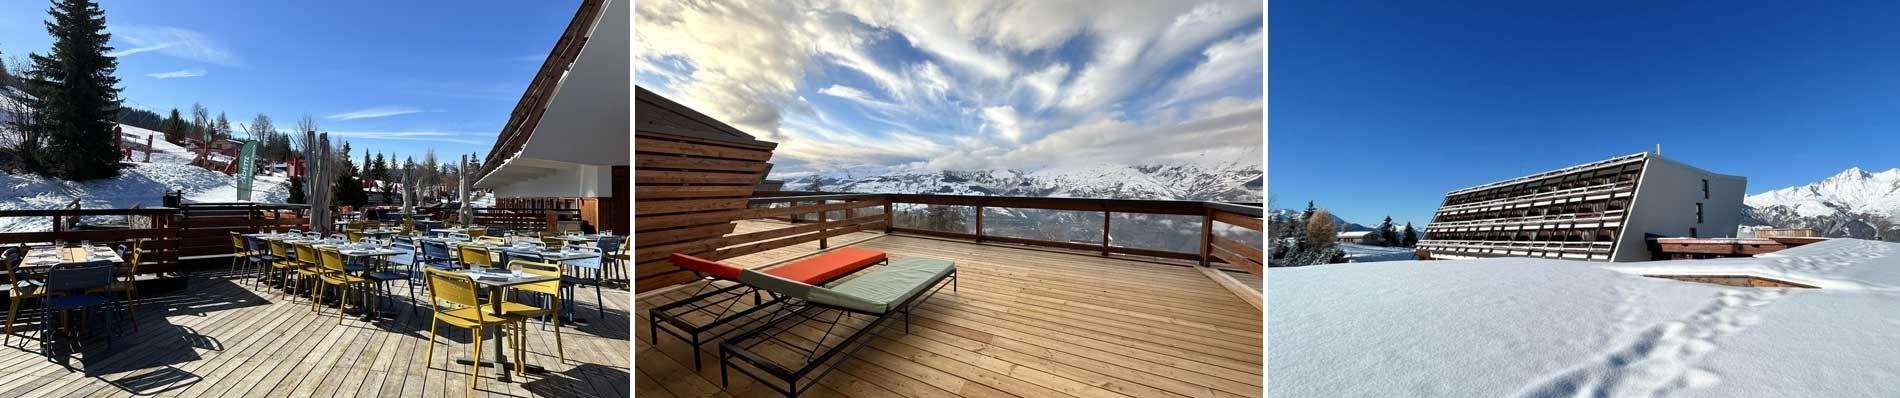 hotel la cachette arc 1600 les arcs paradiski wintersport hotel skivakantie